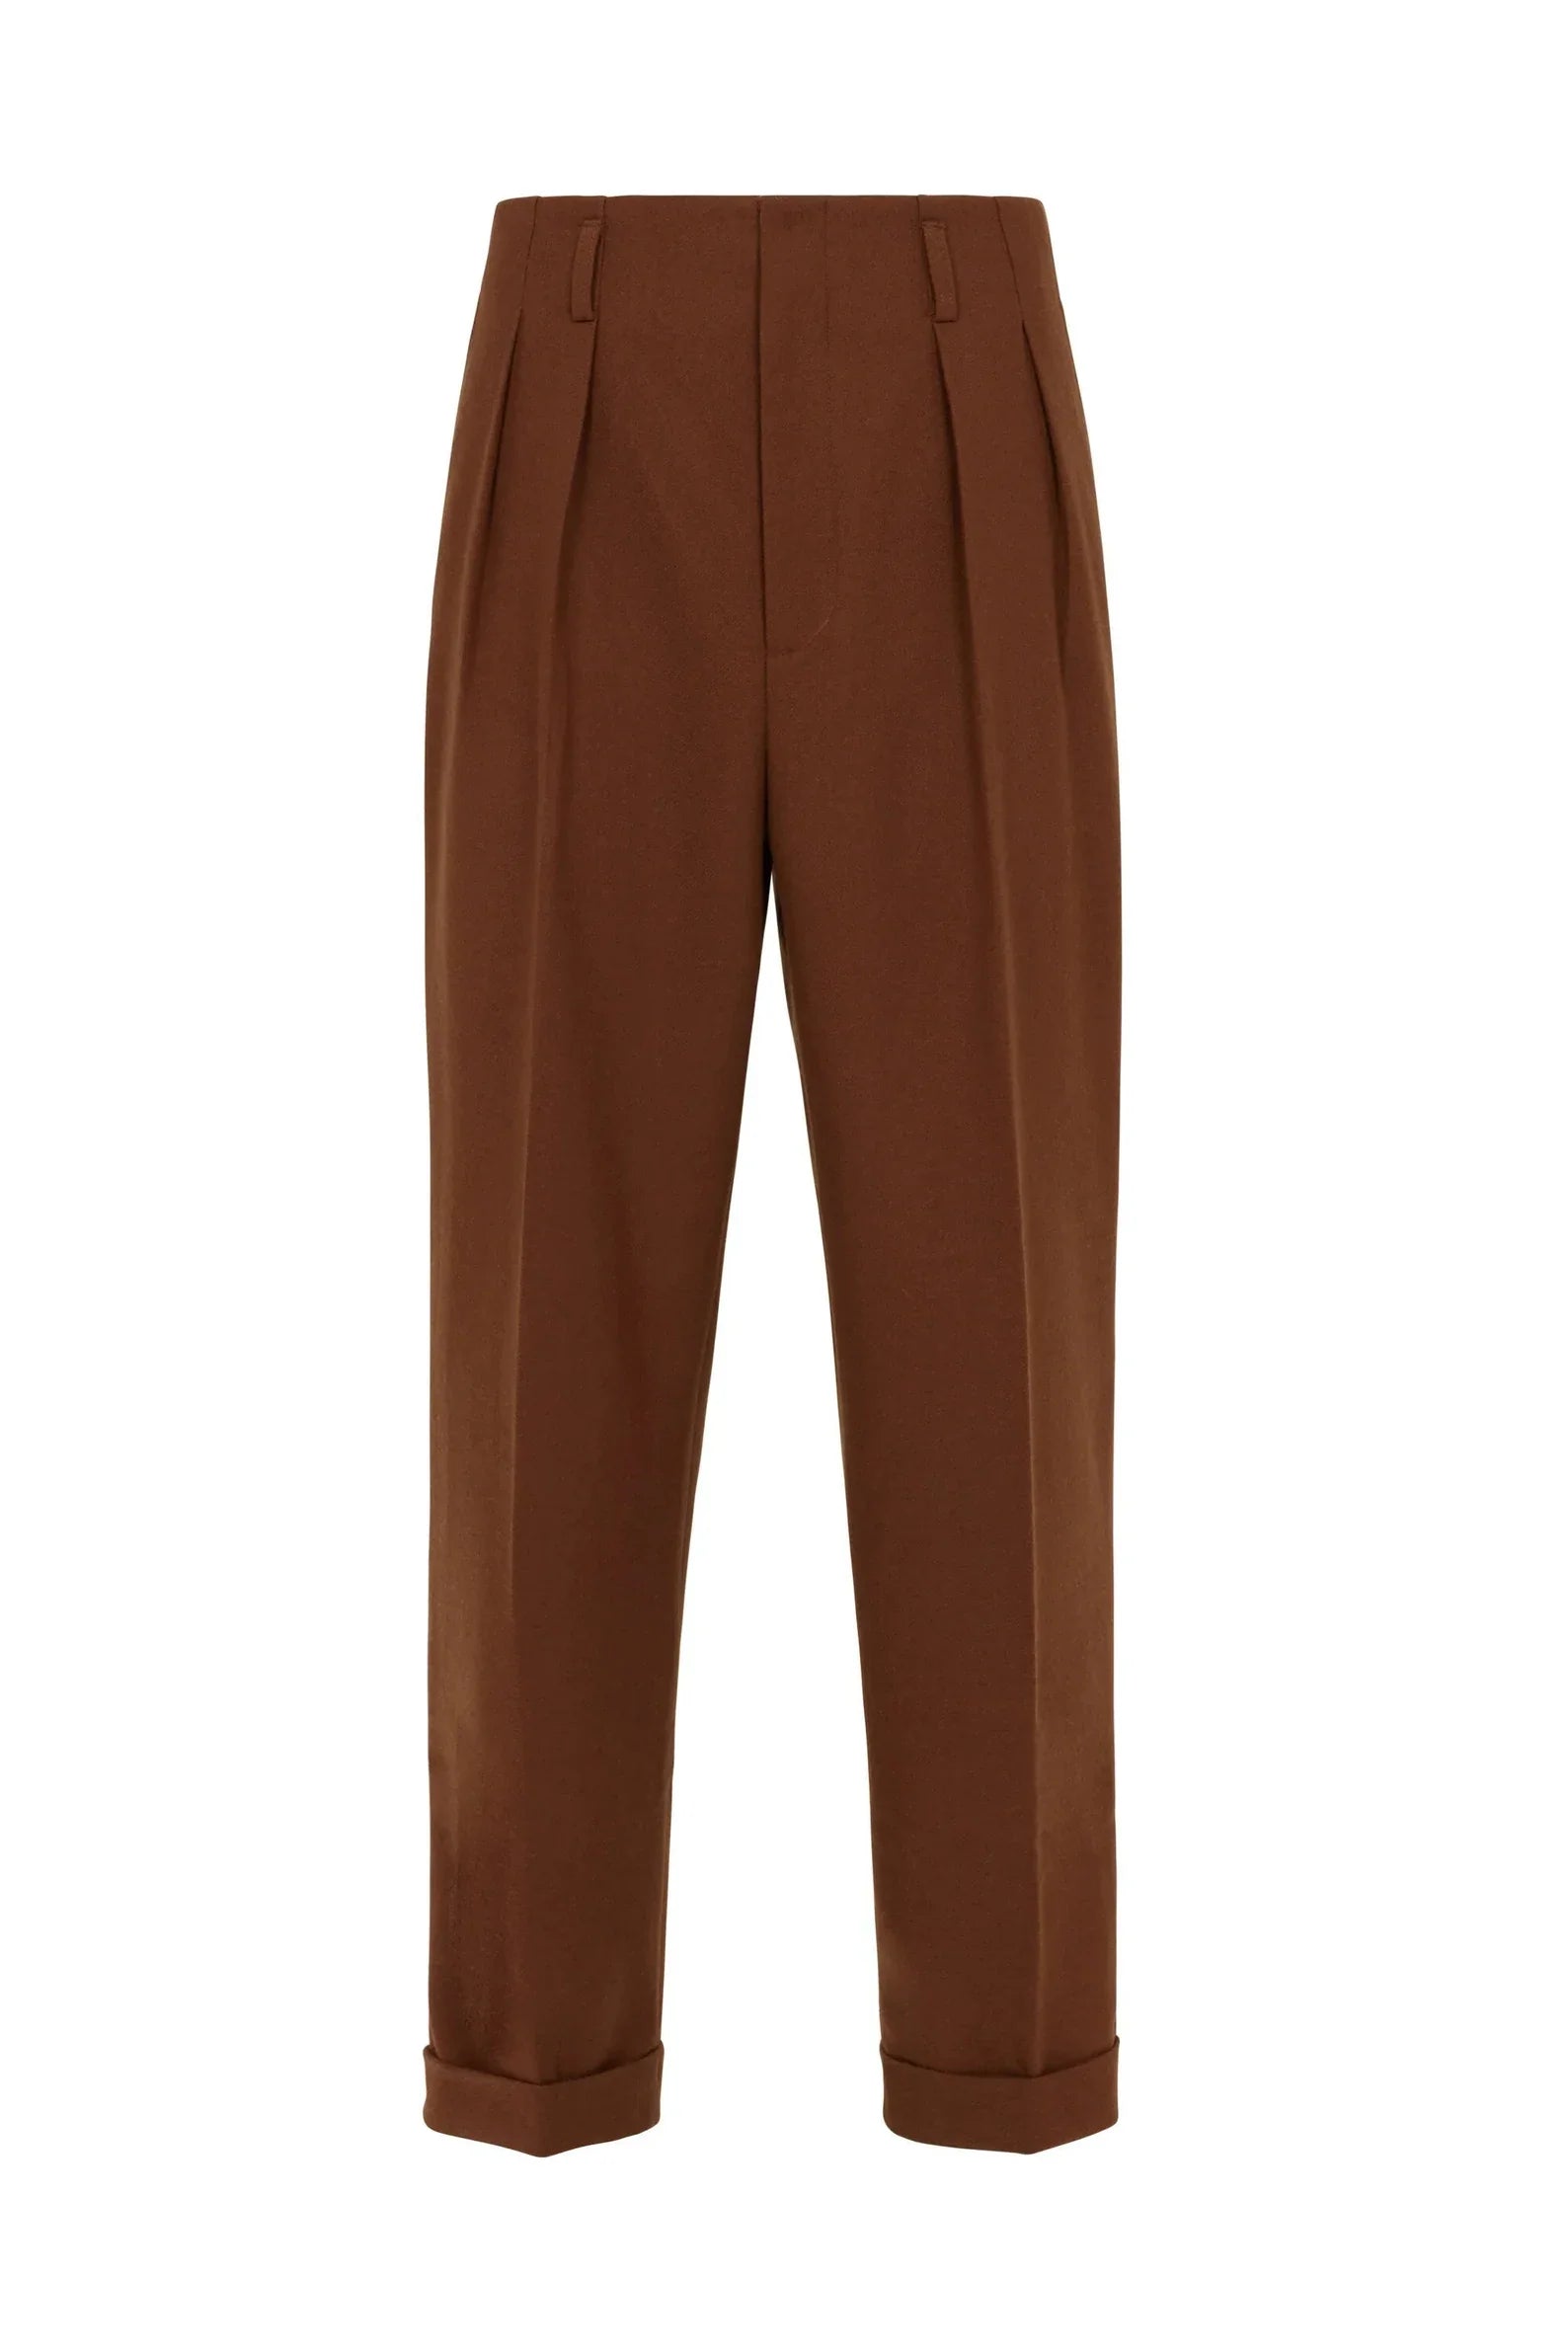 the brown pant